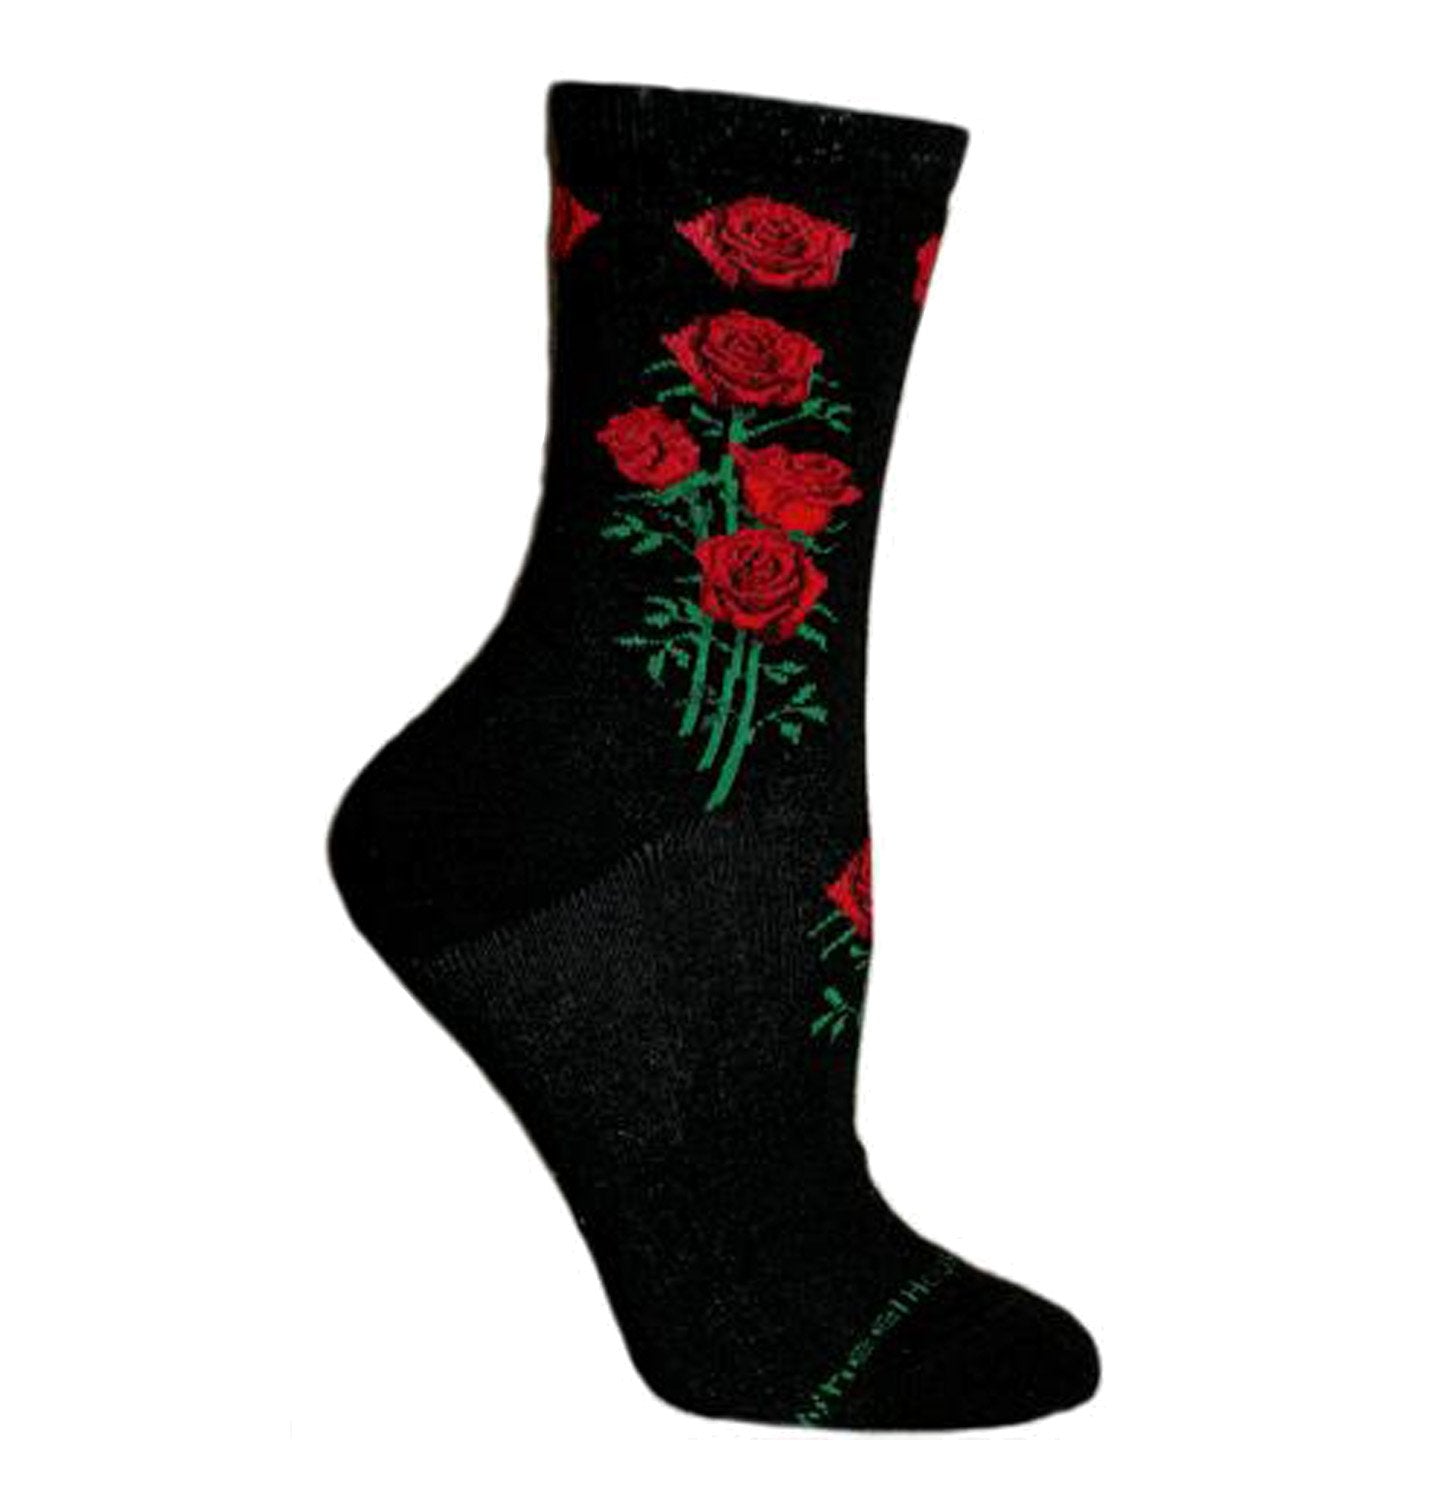 Animal Pride - Red Roses on Black - Adult Cotton Crew Socks